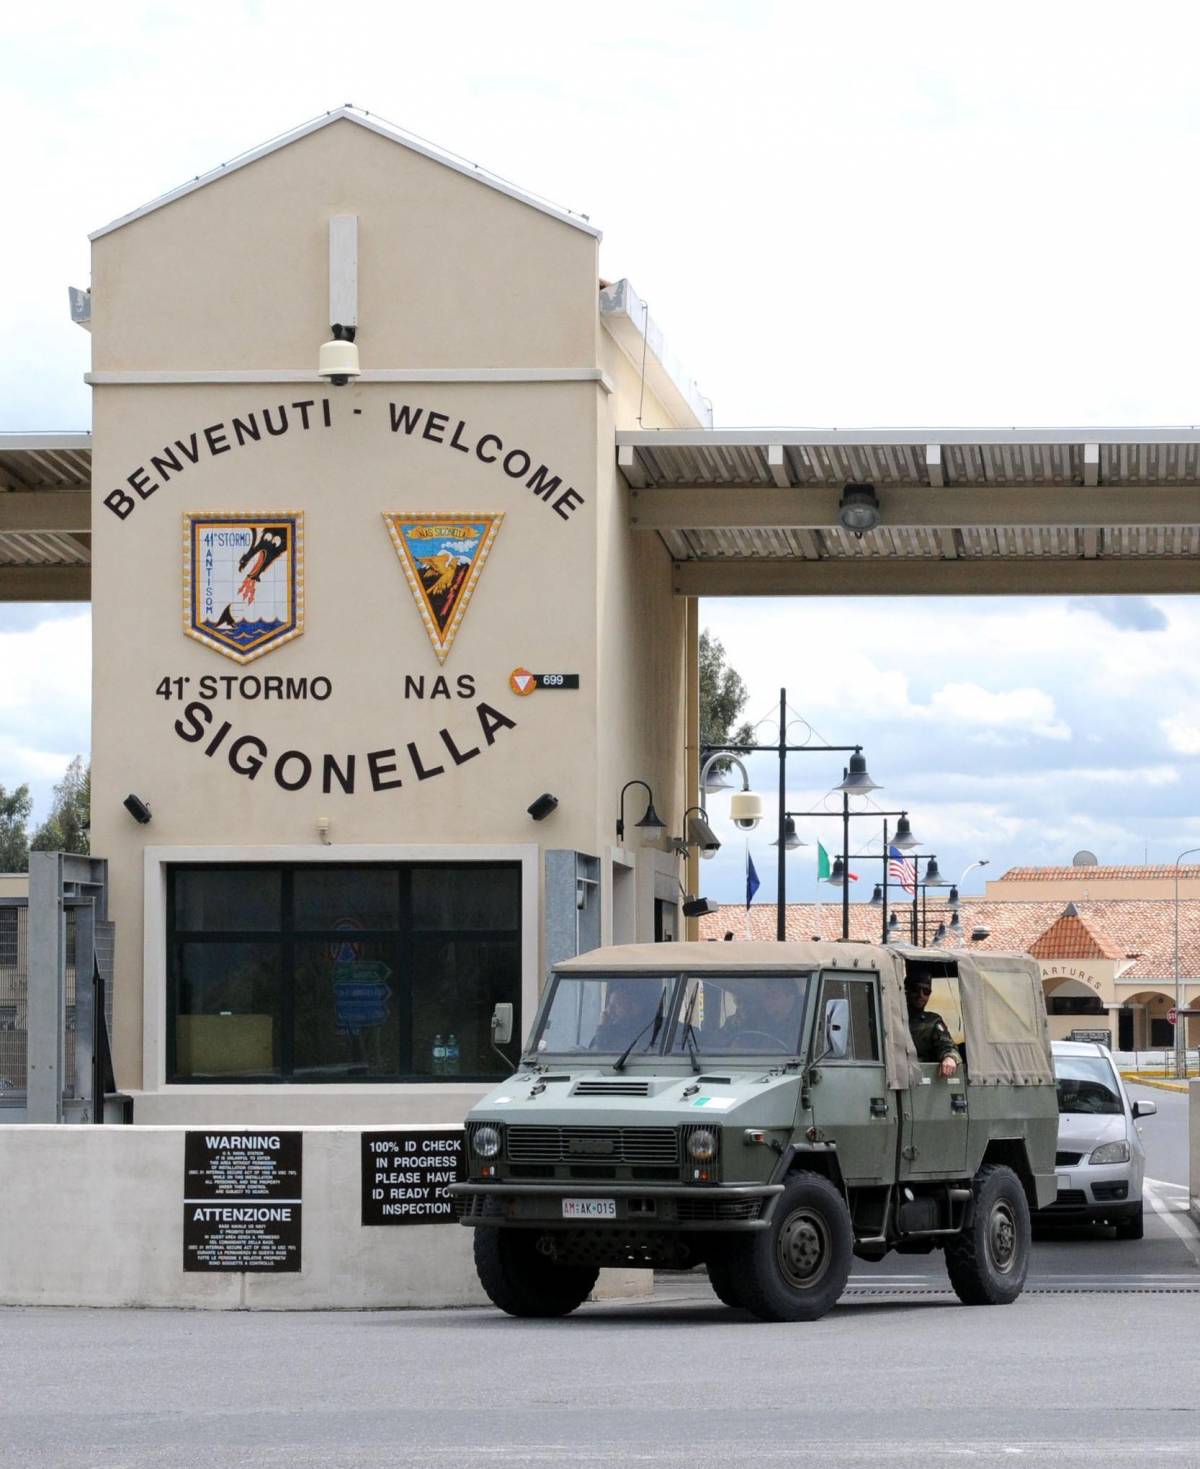 Crisi in Libia, i marines americani tornano a Sigonella